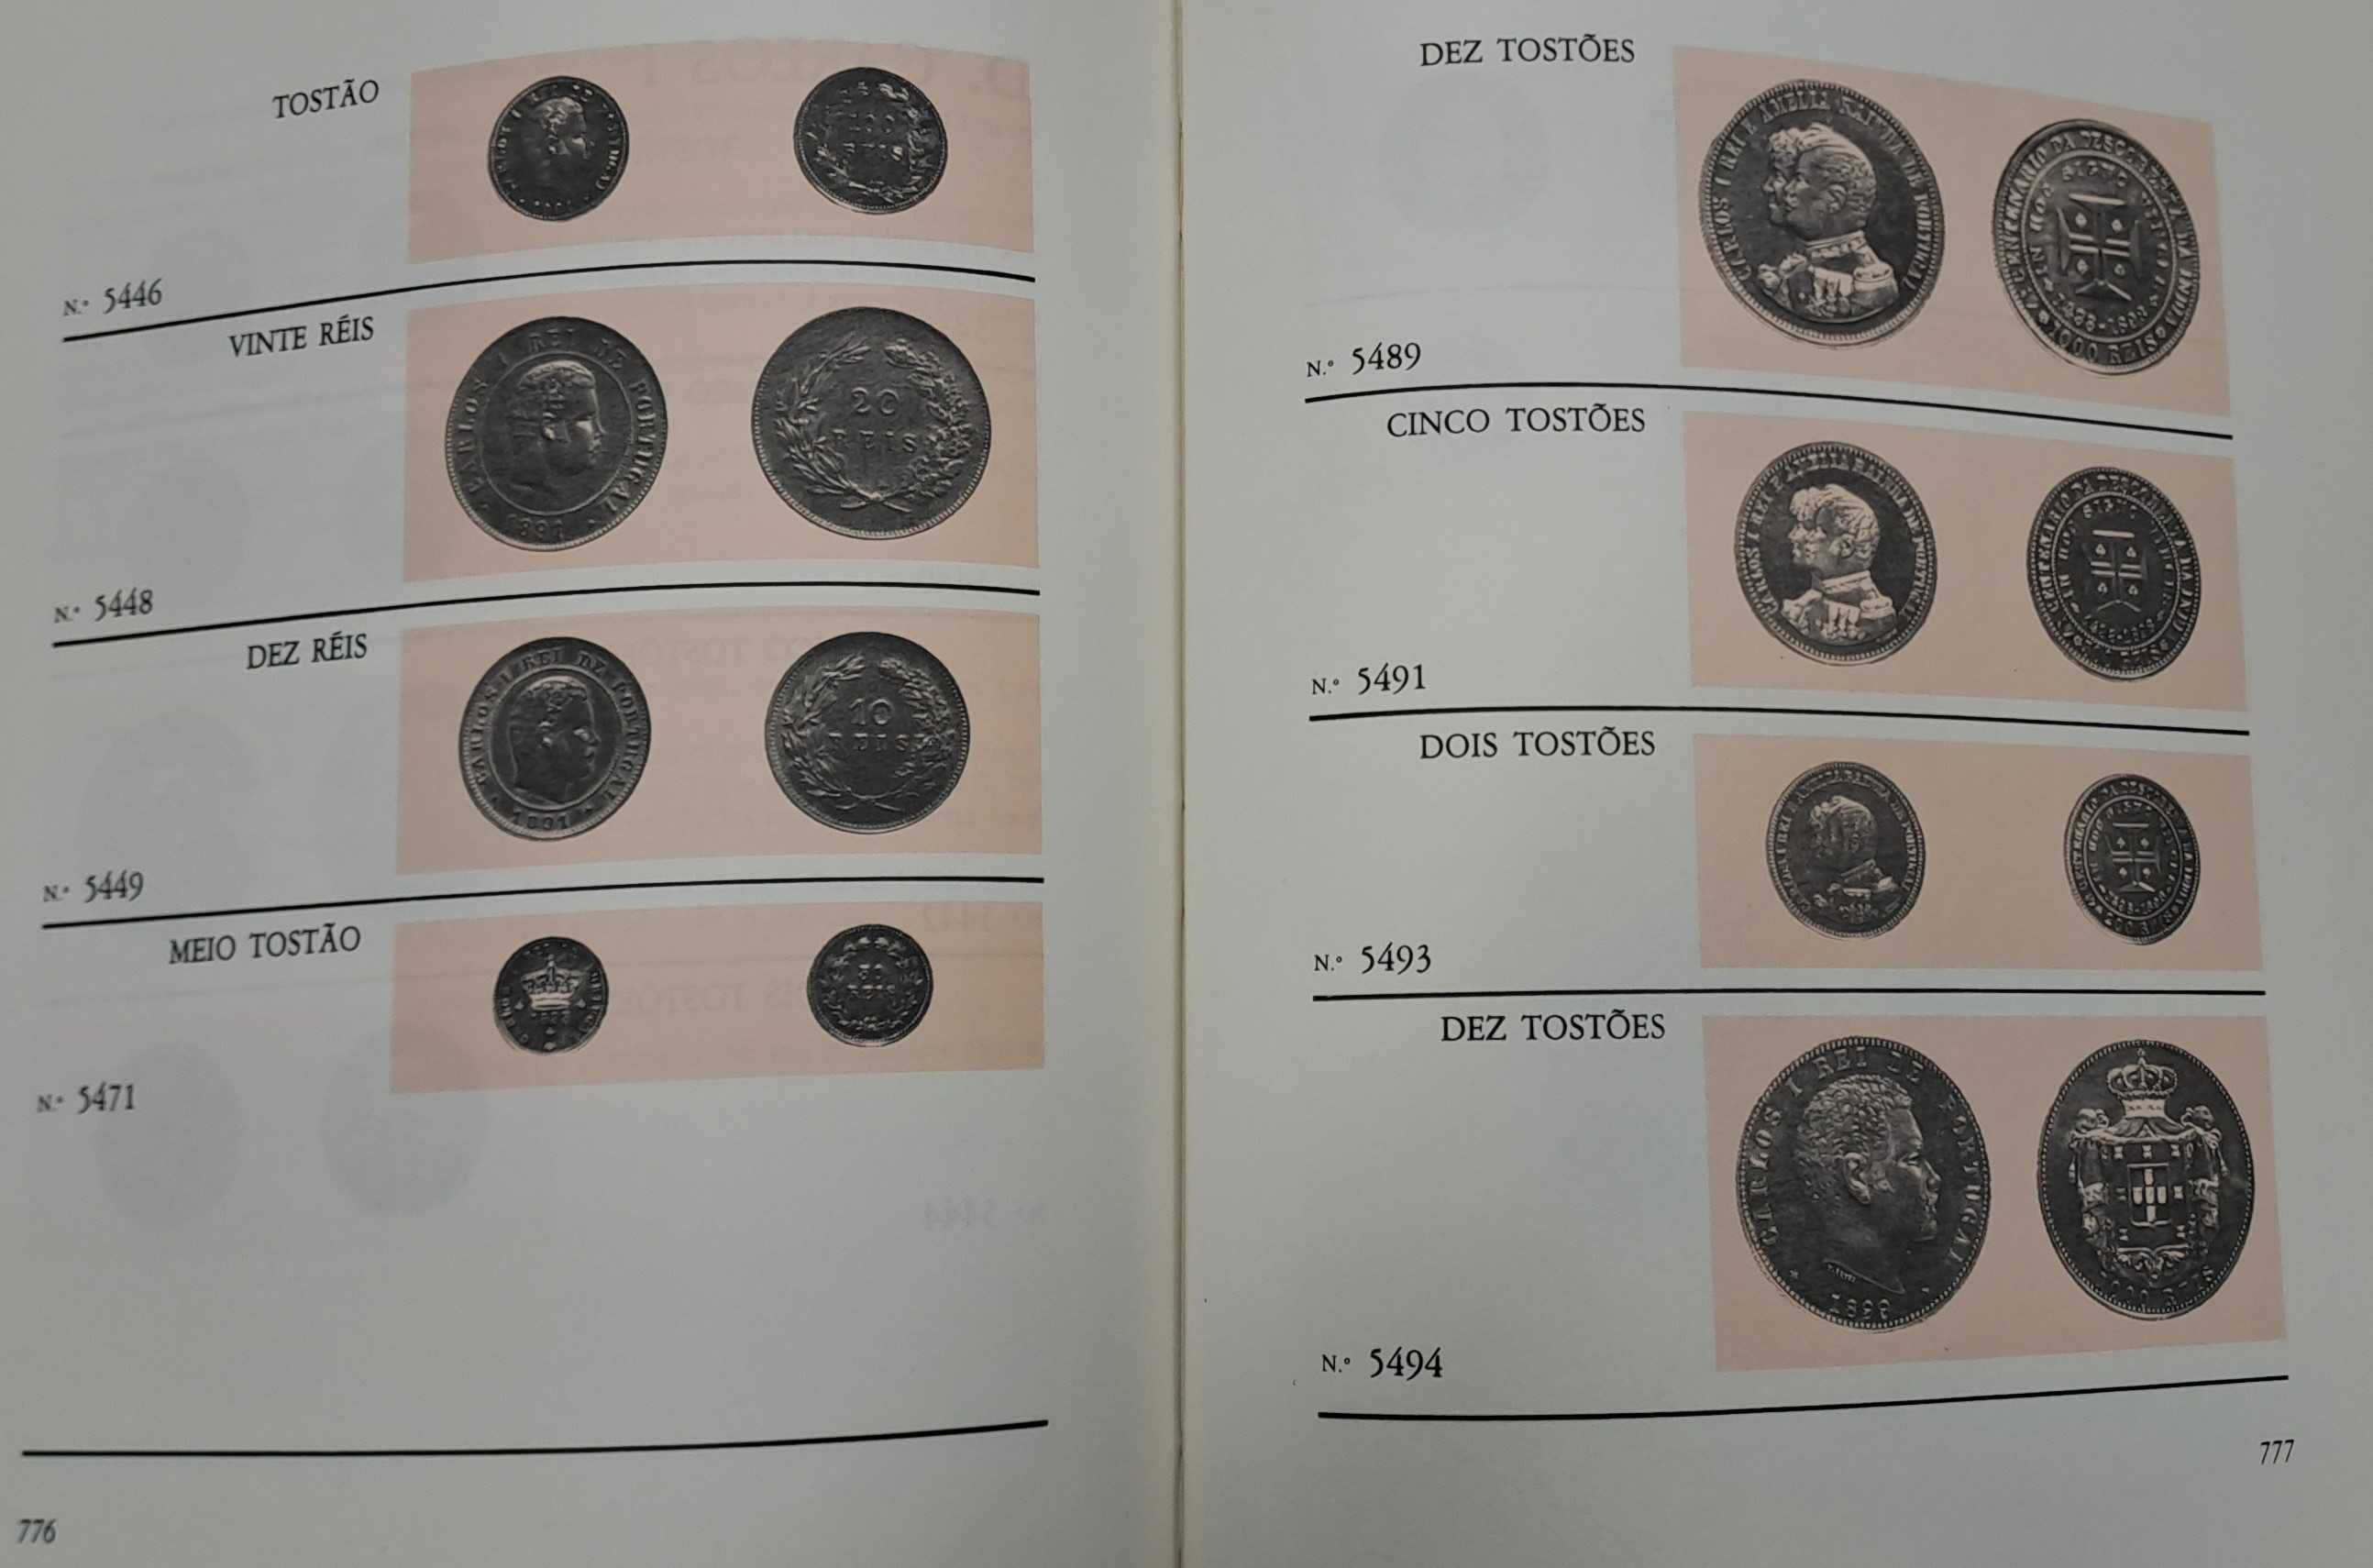 Catálogo descritivo das moedas portuguesas - TOMO II